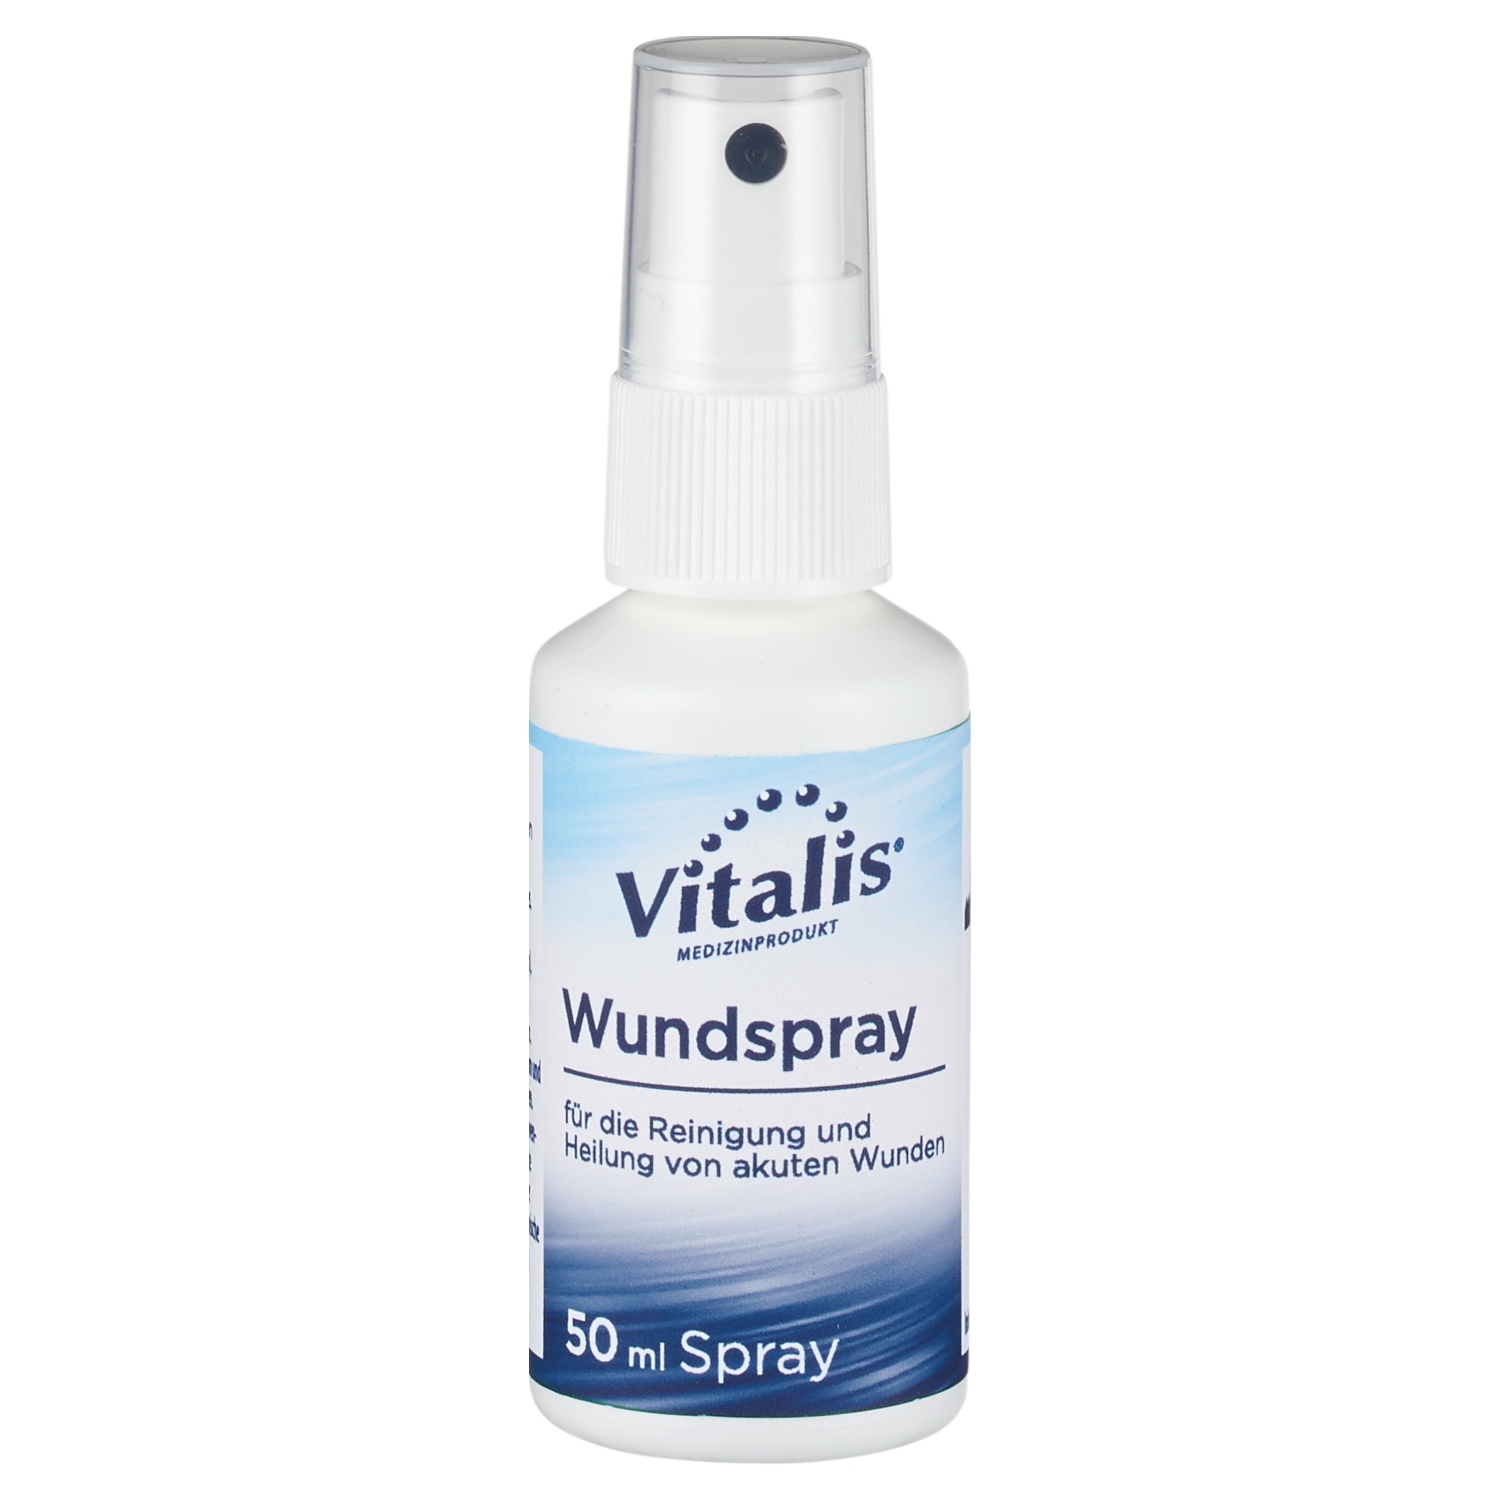 Vitalis® Wundspray 50ml